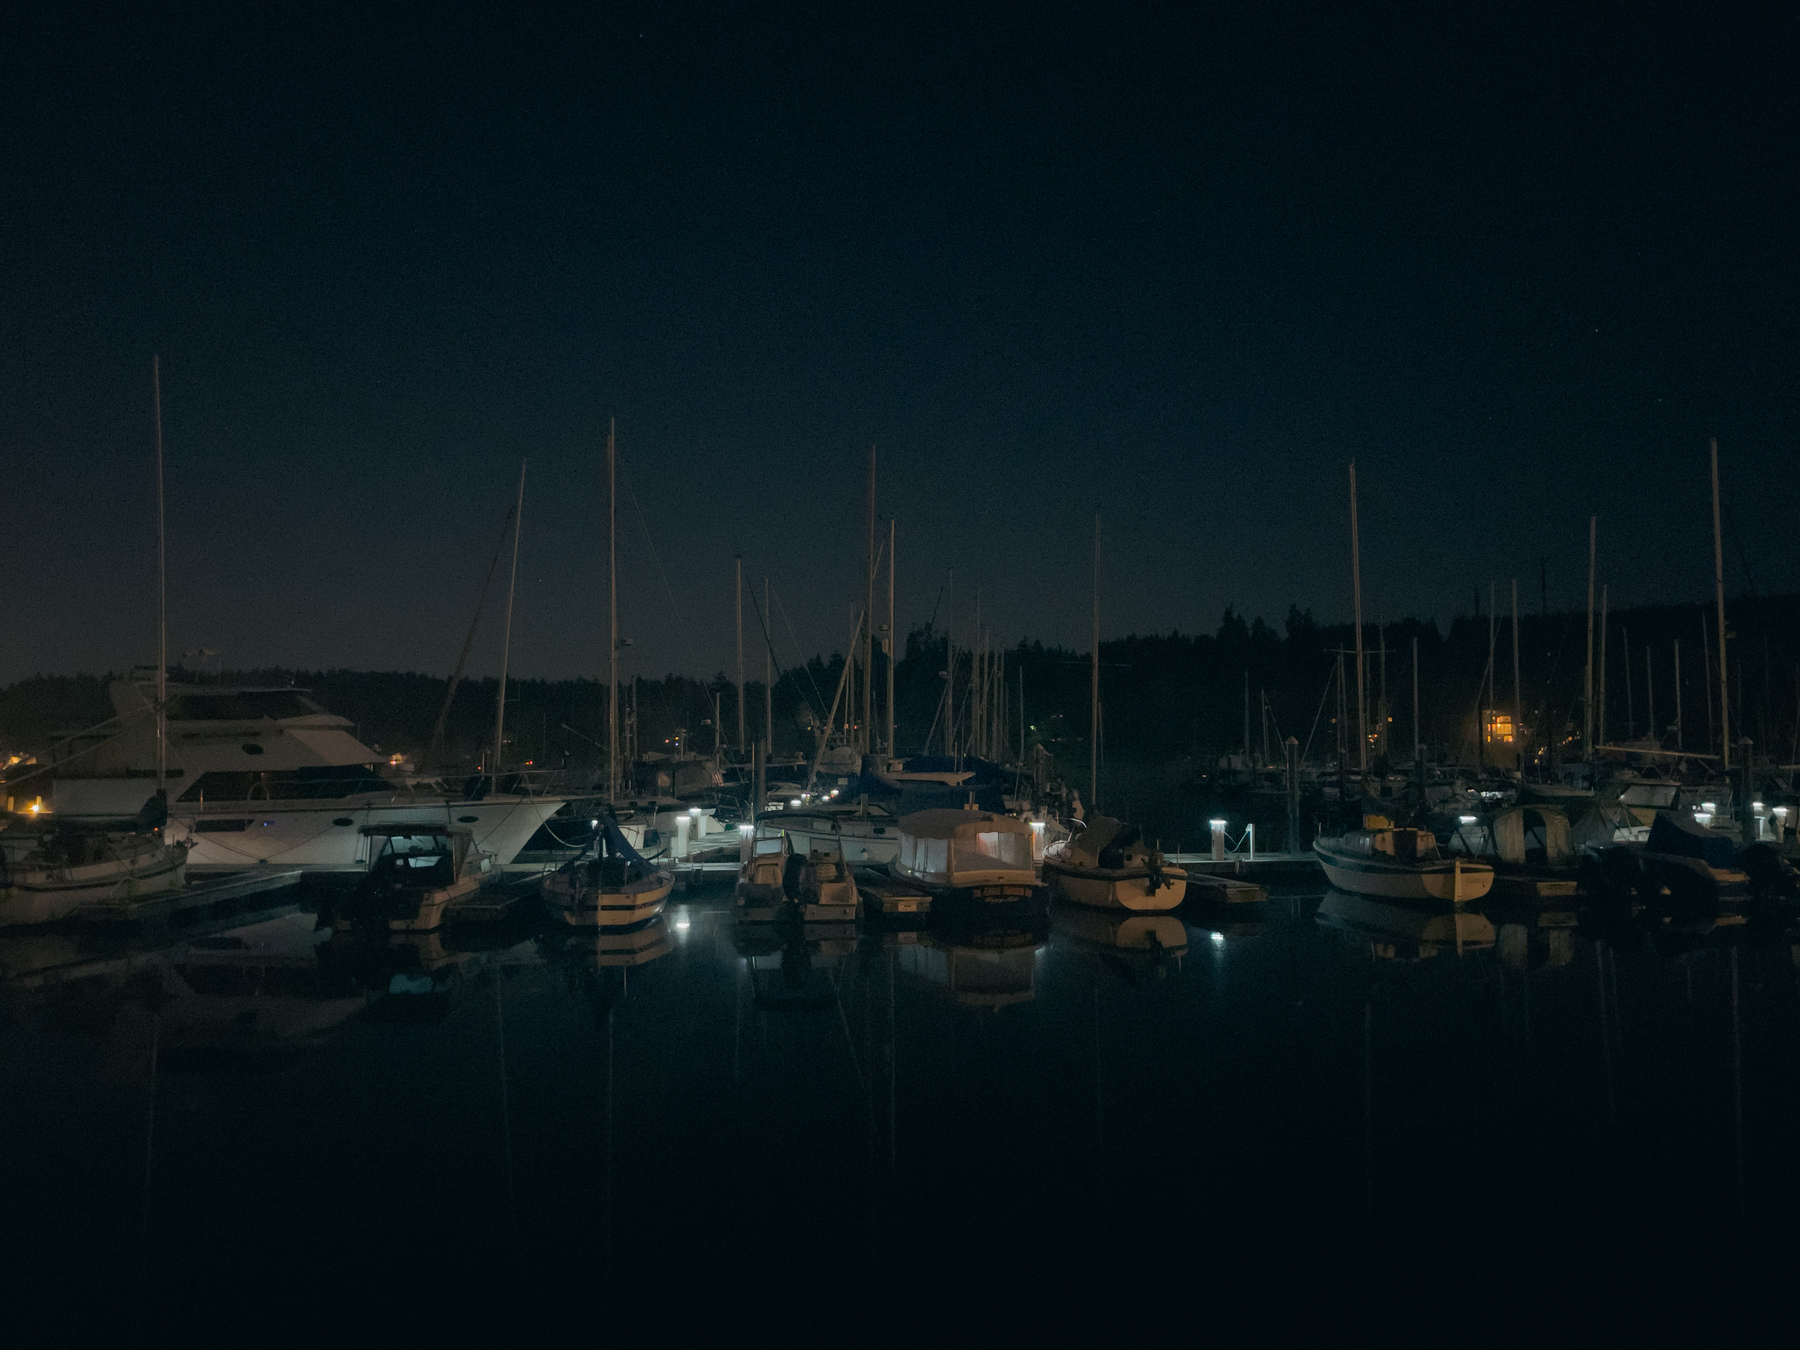 Sailboats in the harbor at night.